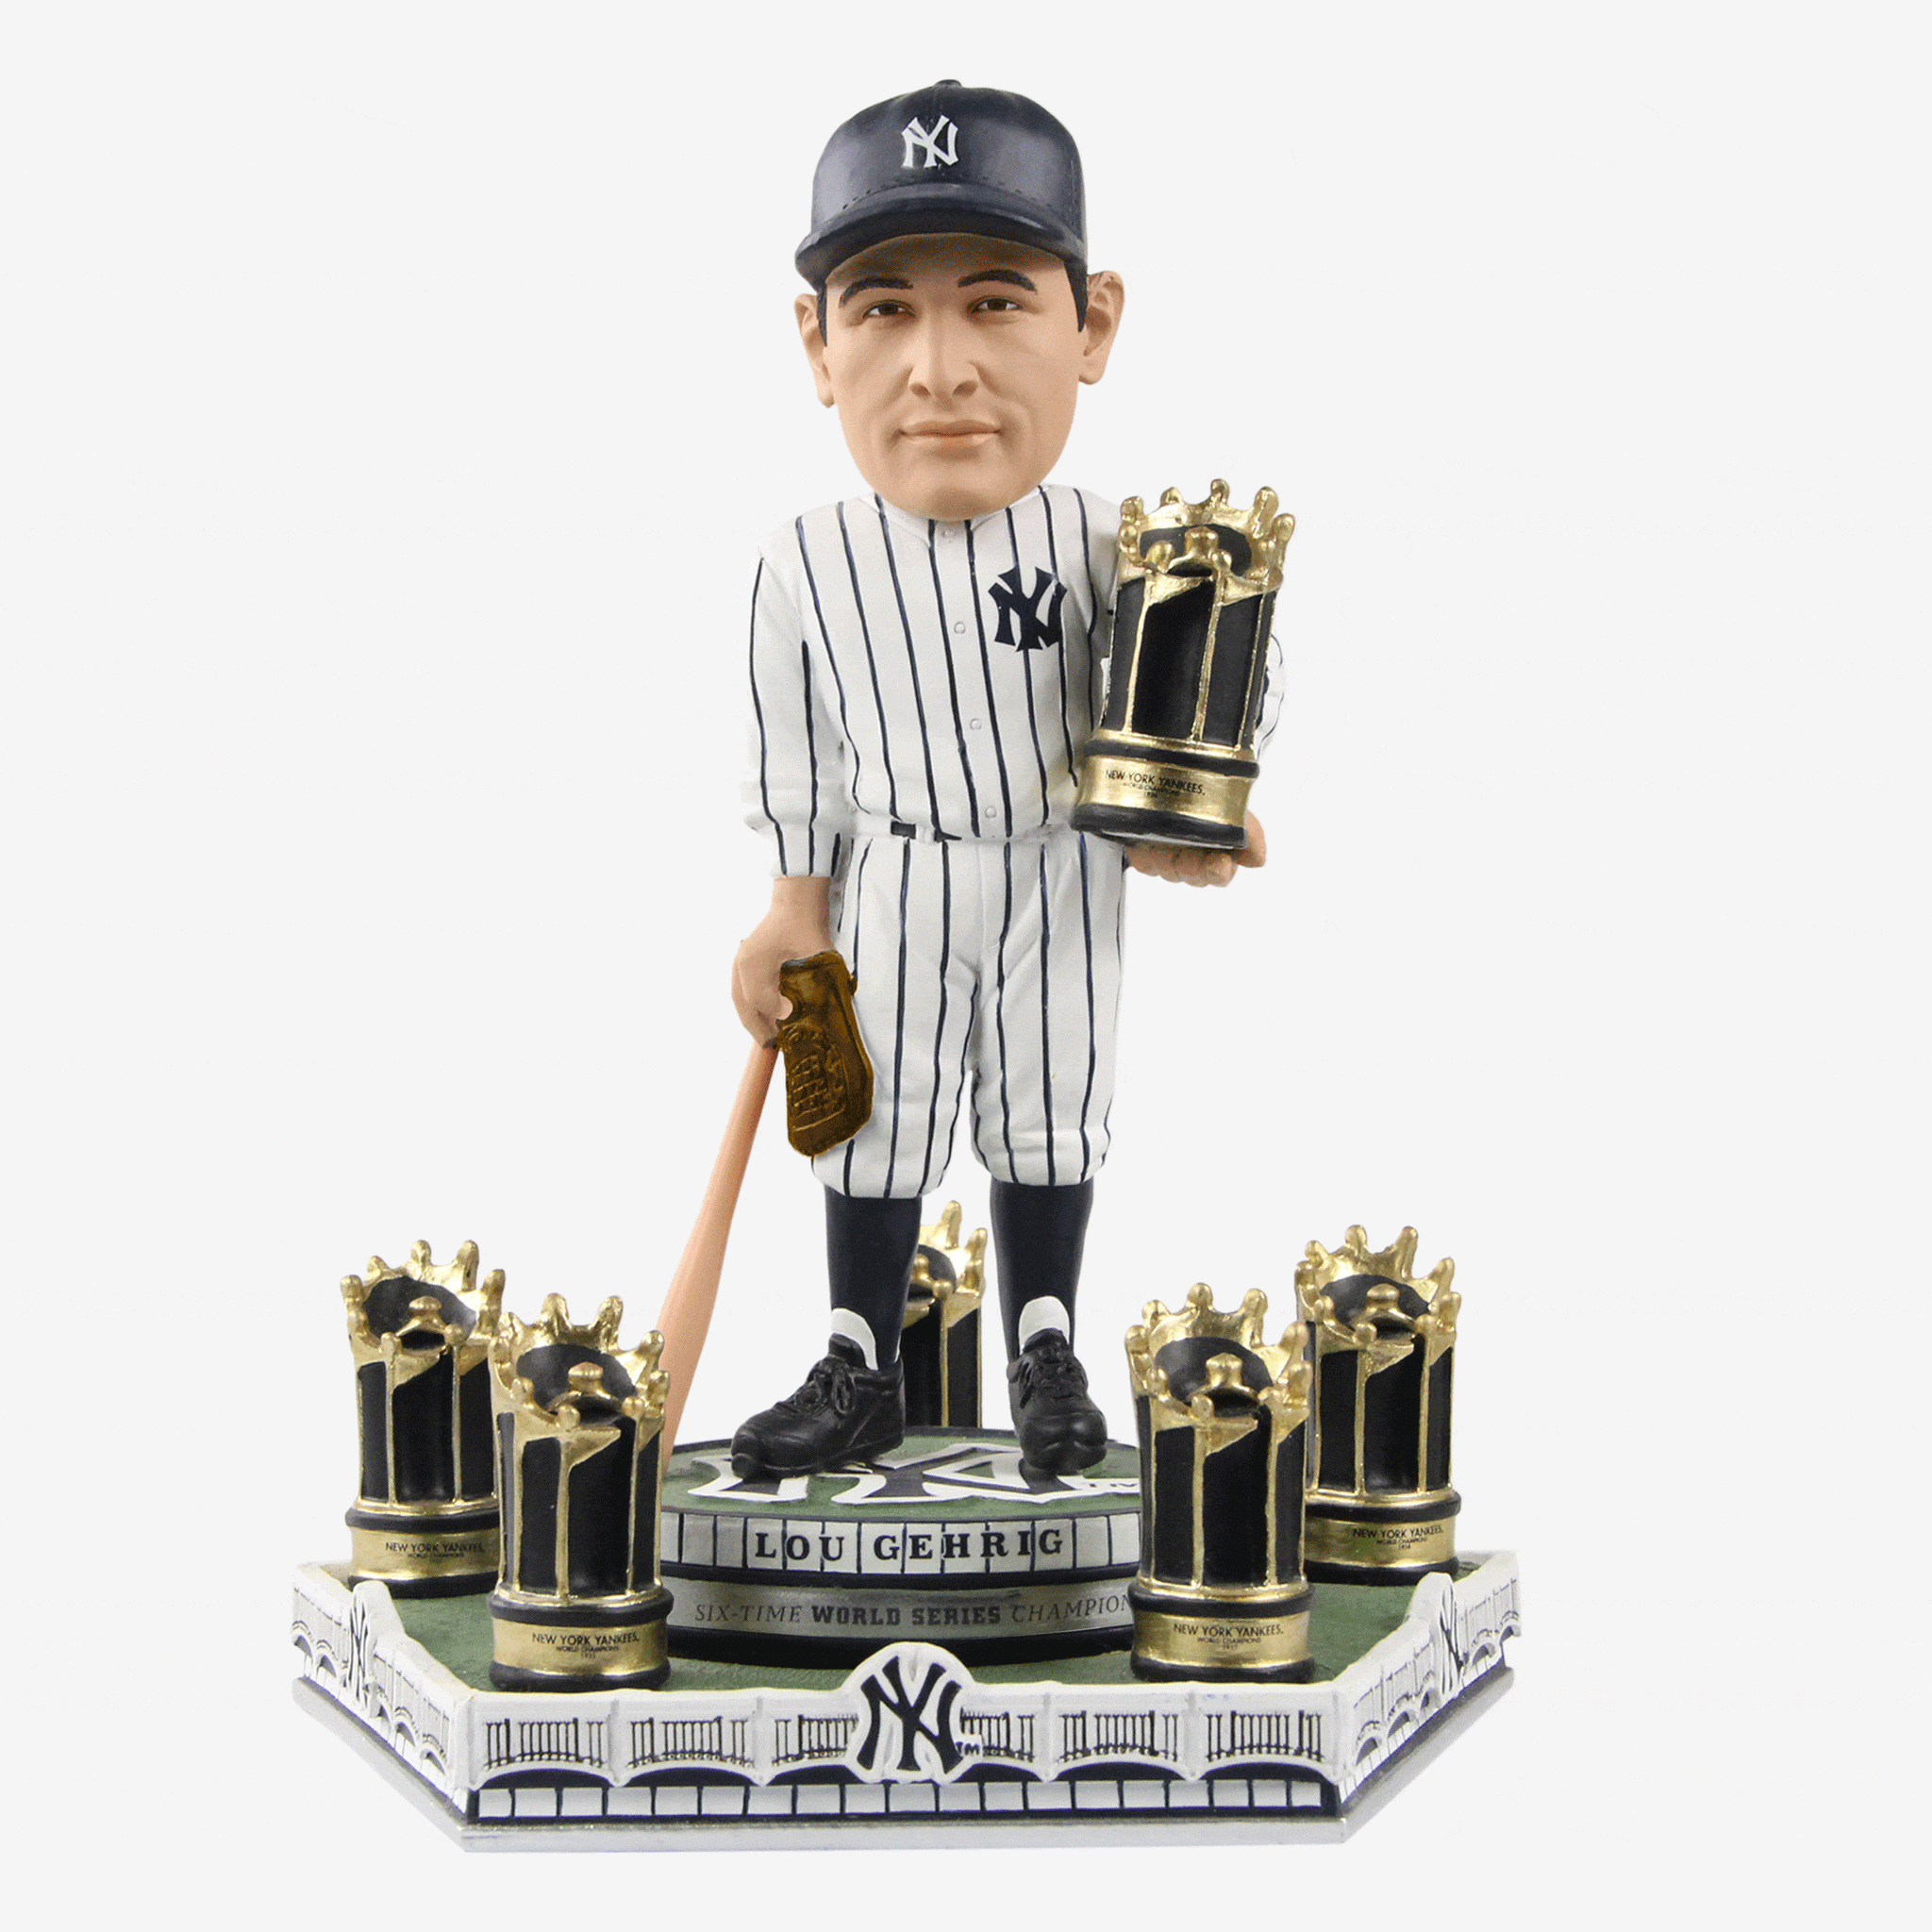 Lou Gehrig New York Yankees 6x World Series Champion Spinning Bobblehe FOCO